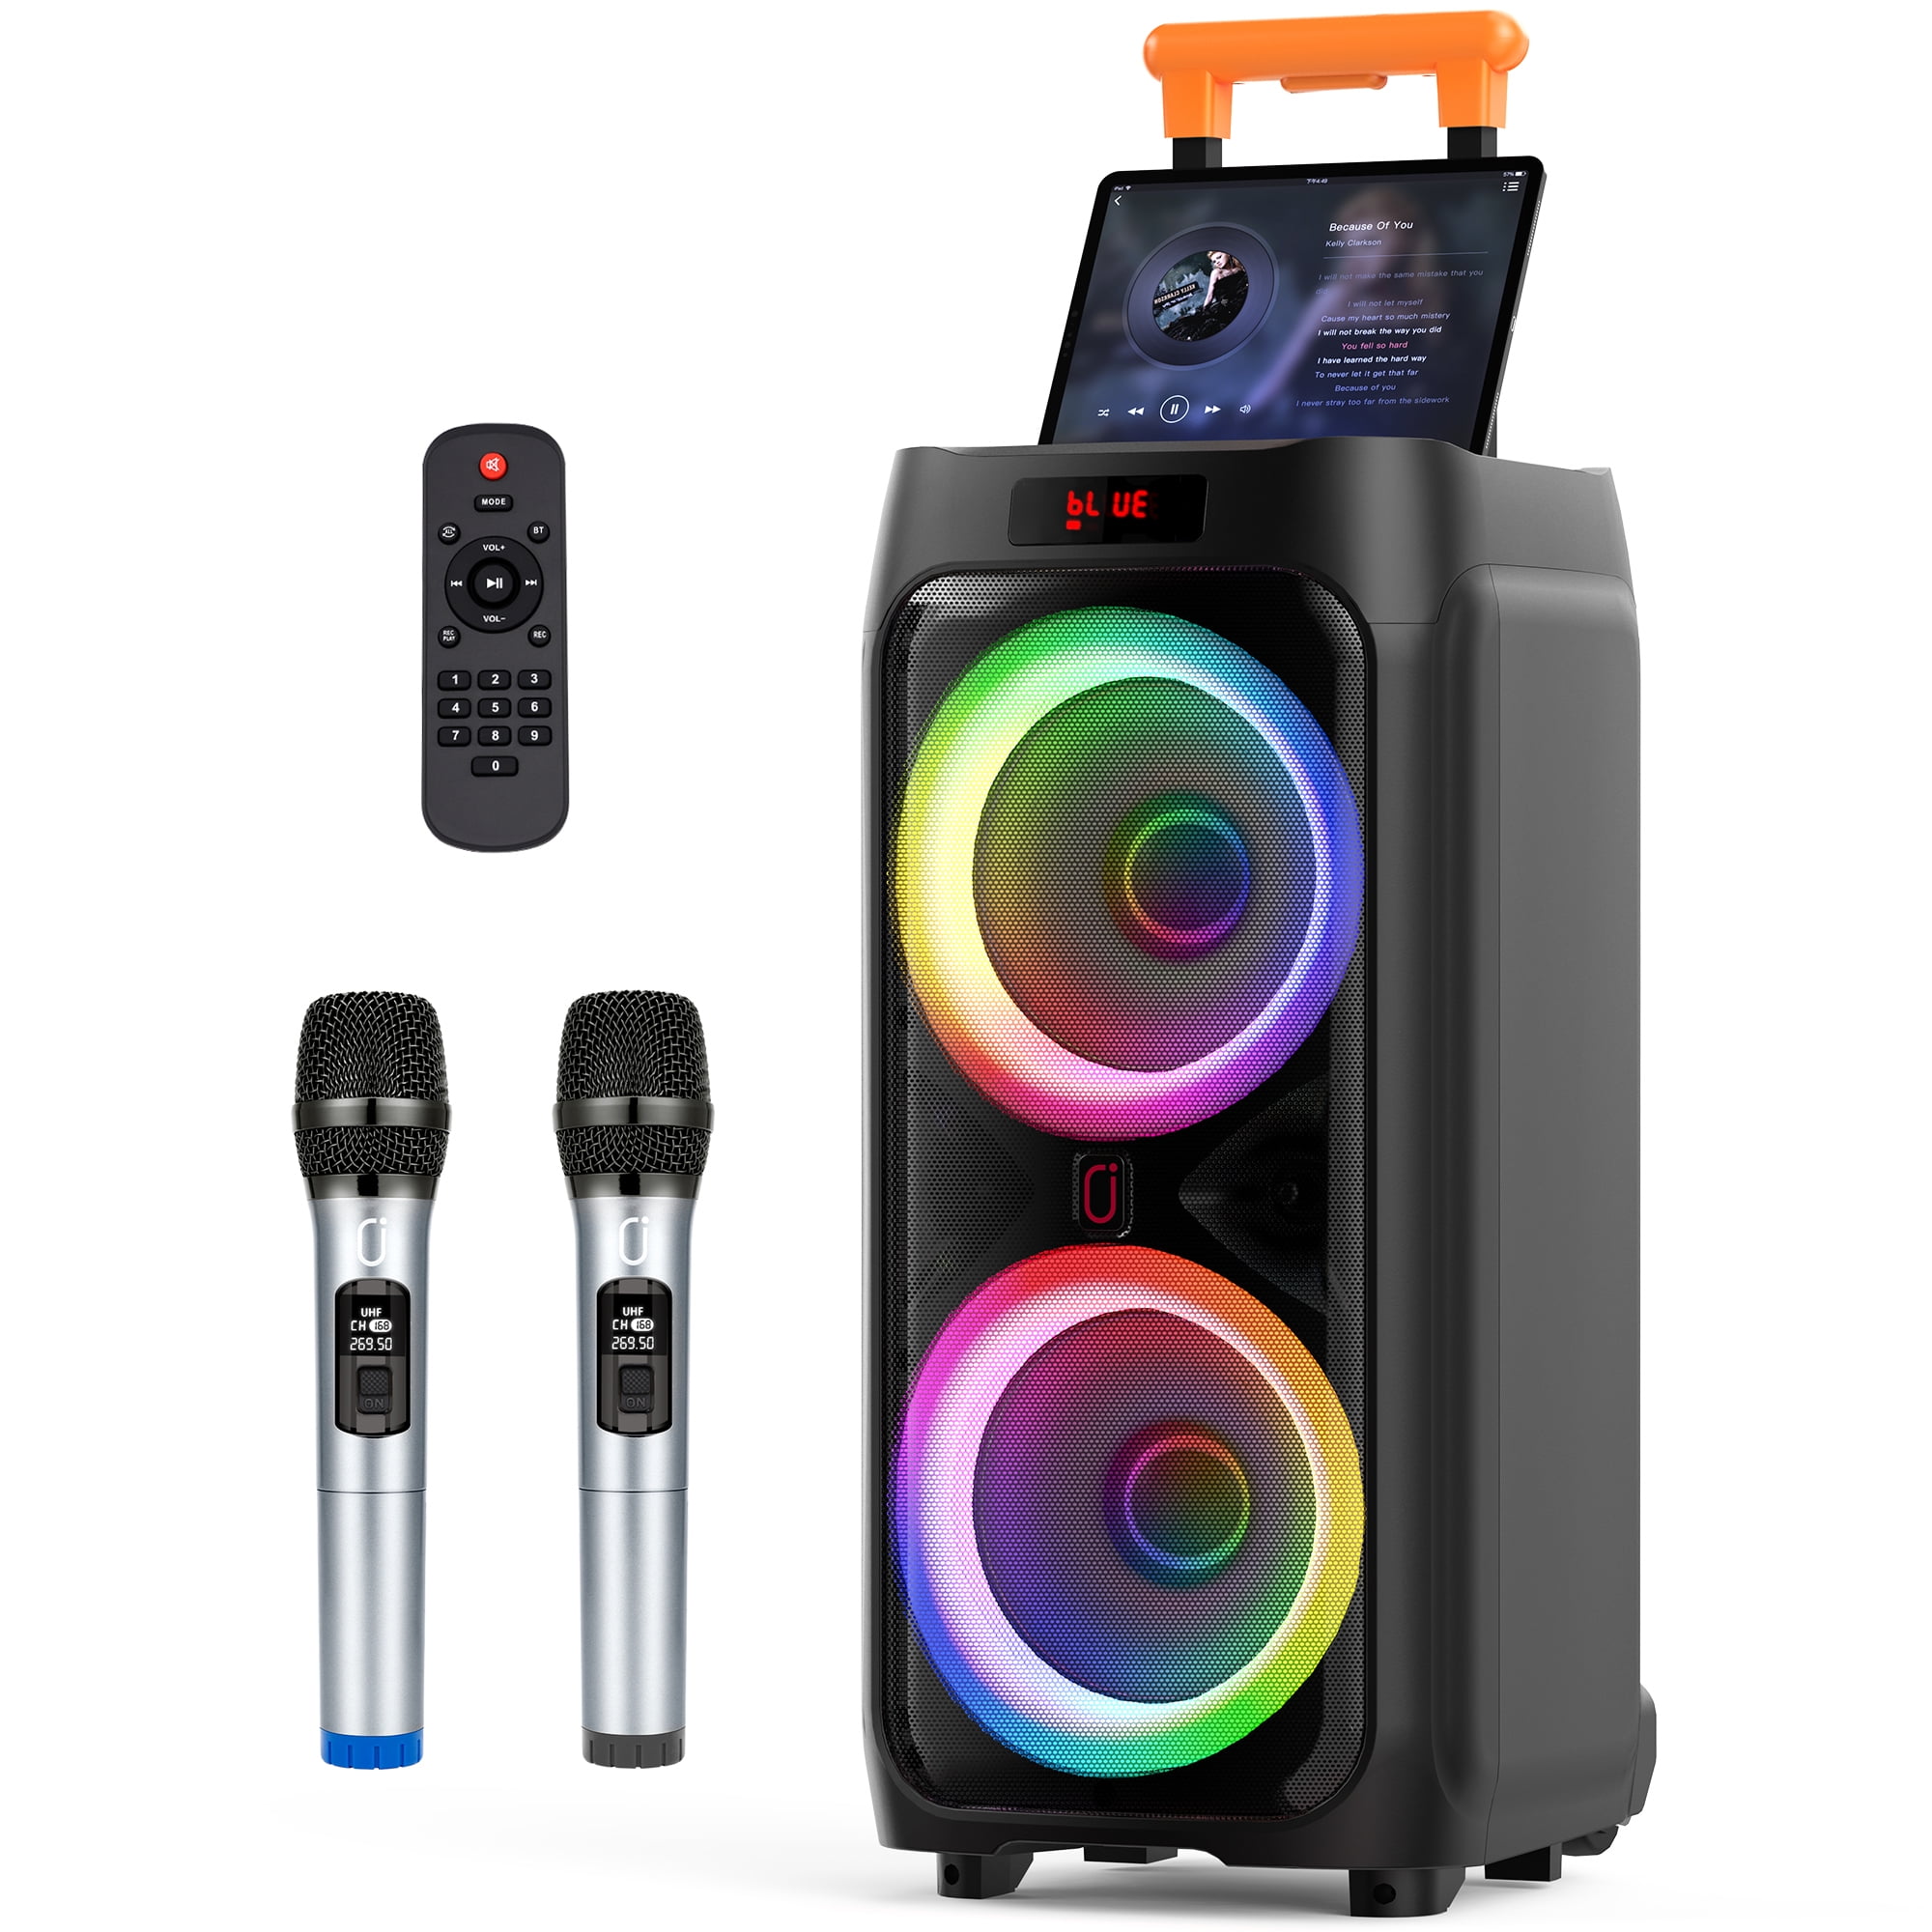 Professional Karaoke Machine for Adults and Kids - Singsation XL Portable  Karaoke System - 60 Voice & 10 Sound Effects, 2 Karaoke Mics, 25